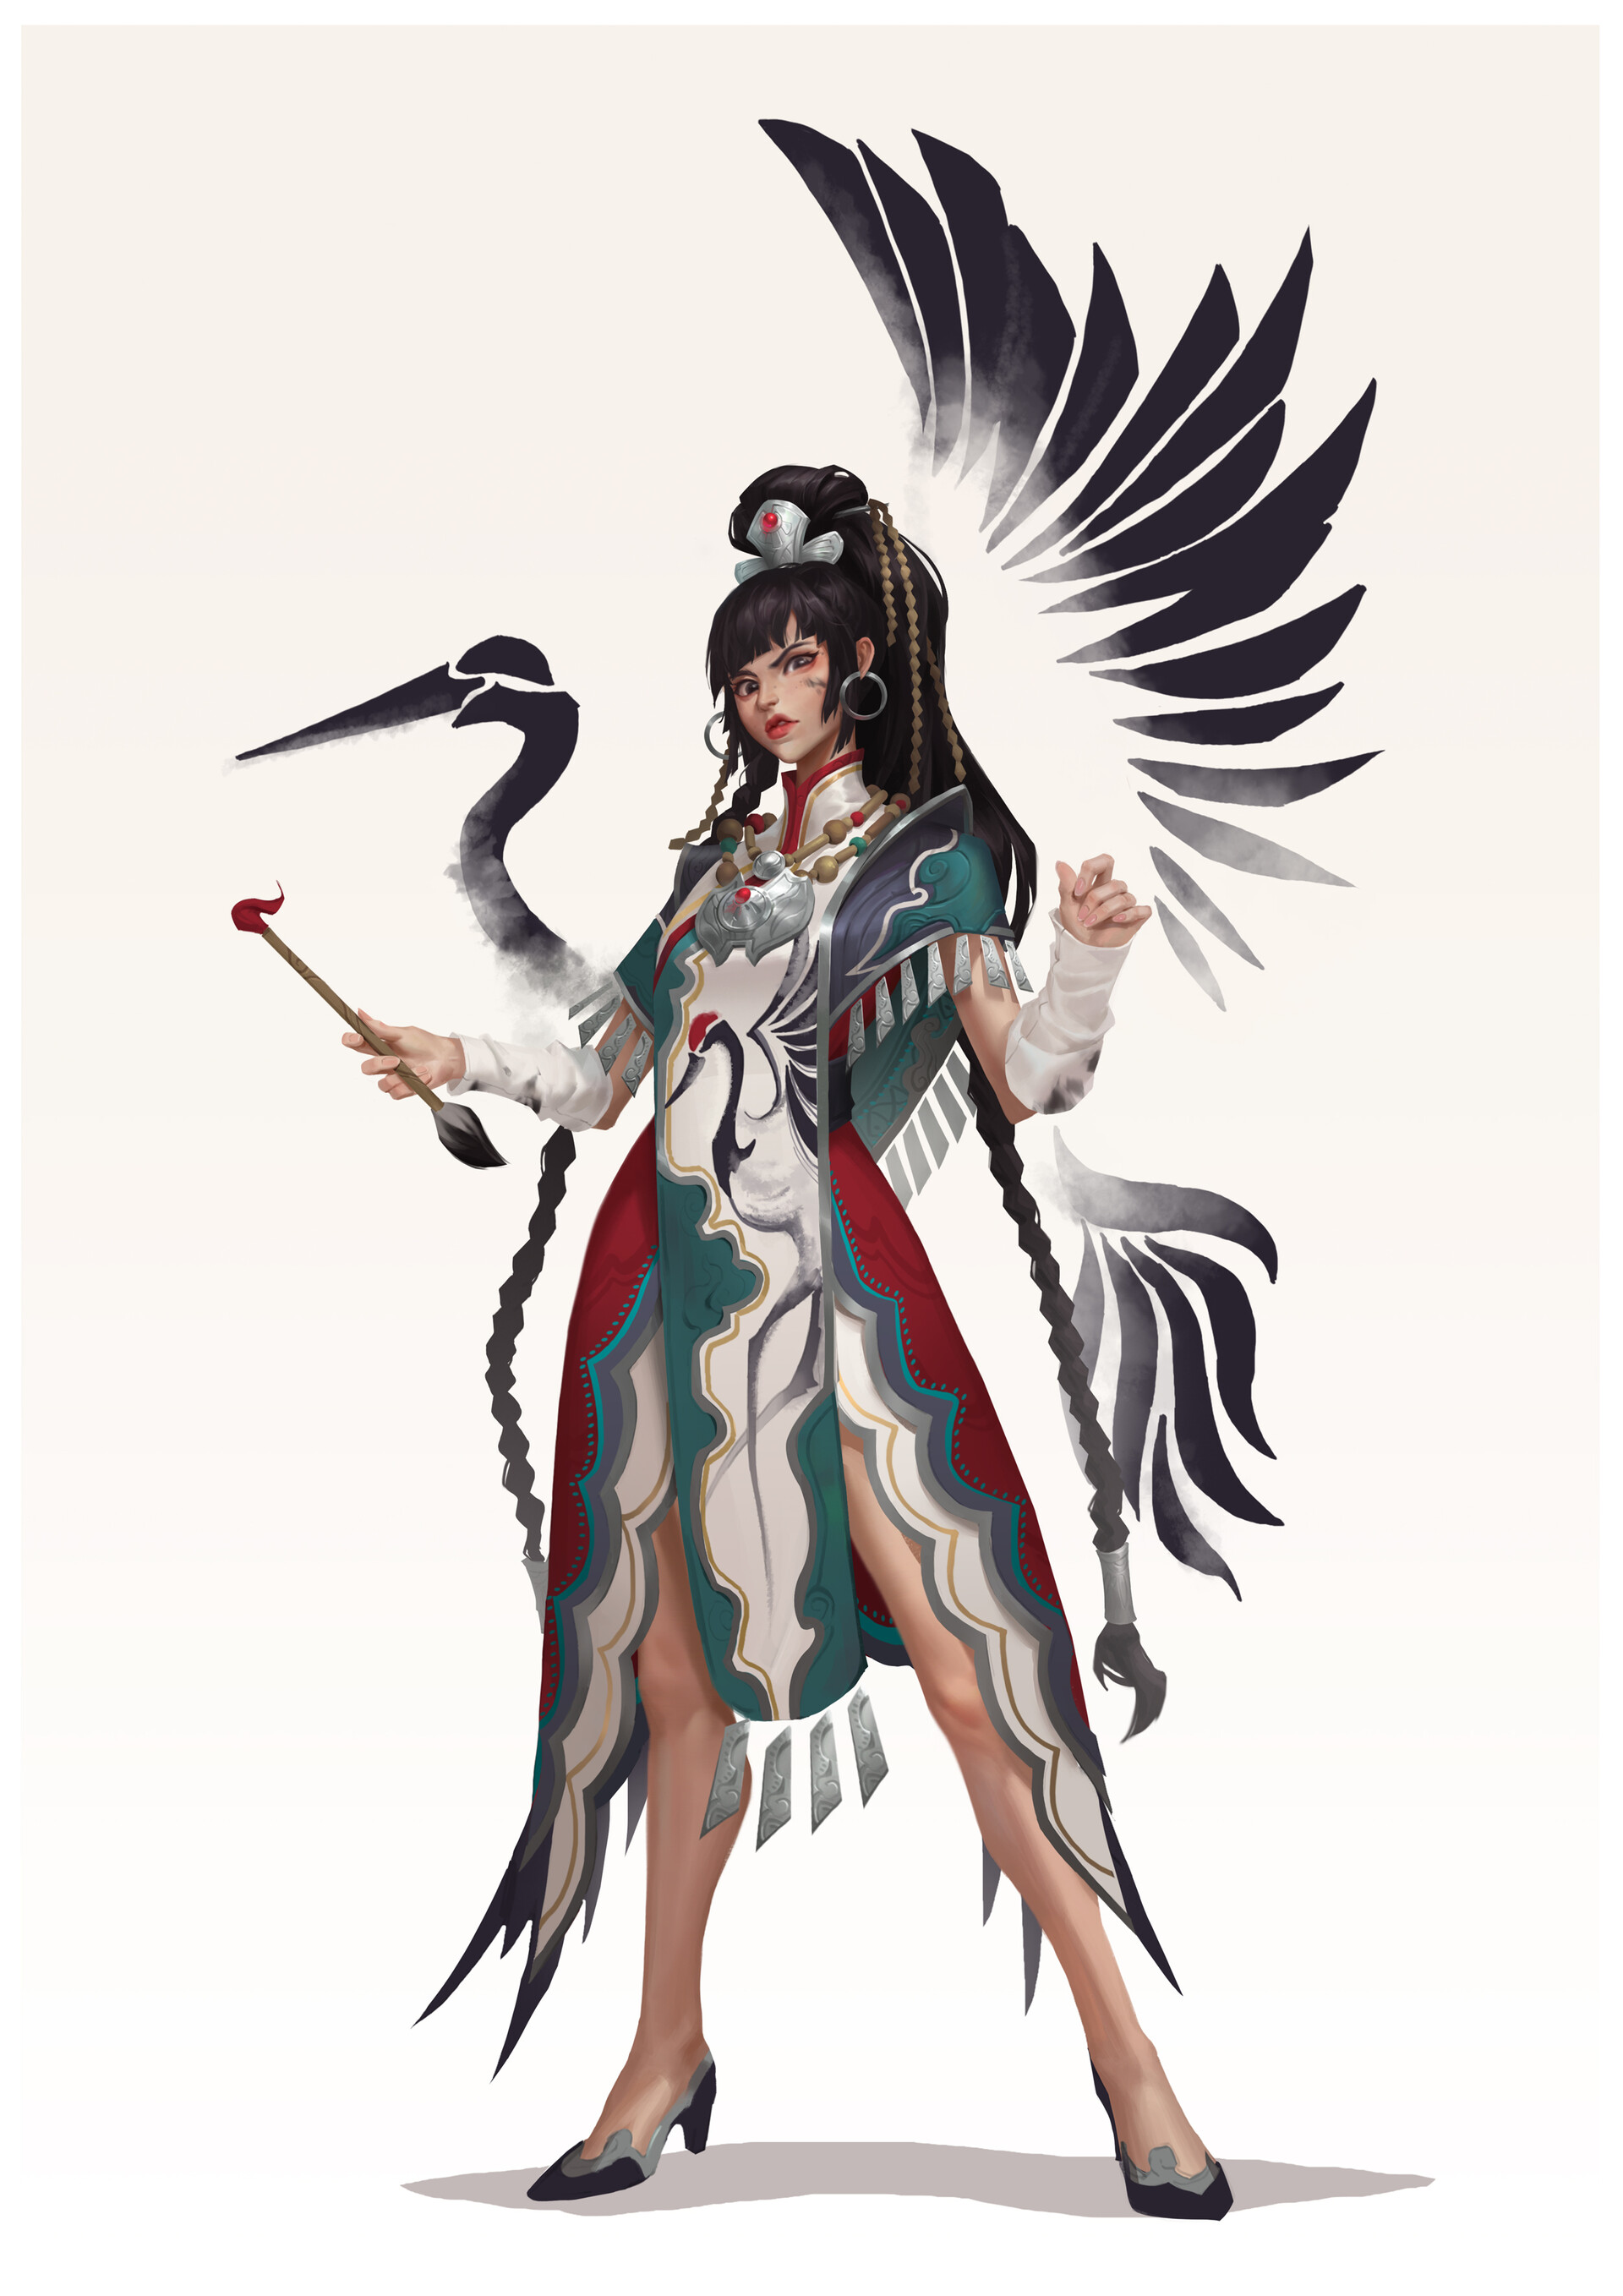 General 1920x2716 Qifeng Lin artwork women white background simple background fantasy art fantasy girl long hair heels legs wings dark hair dress